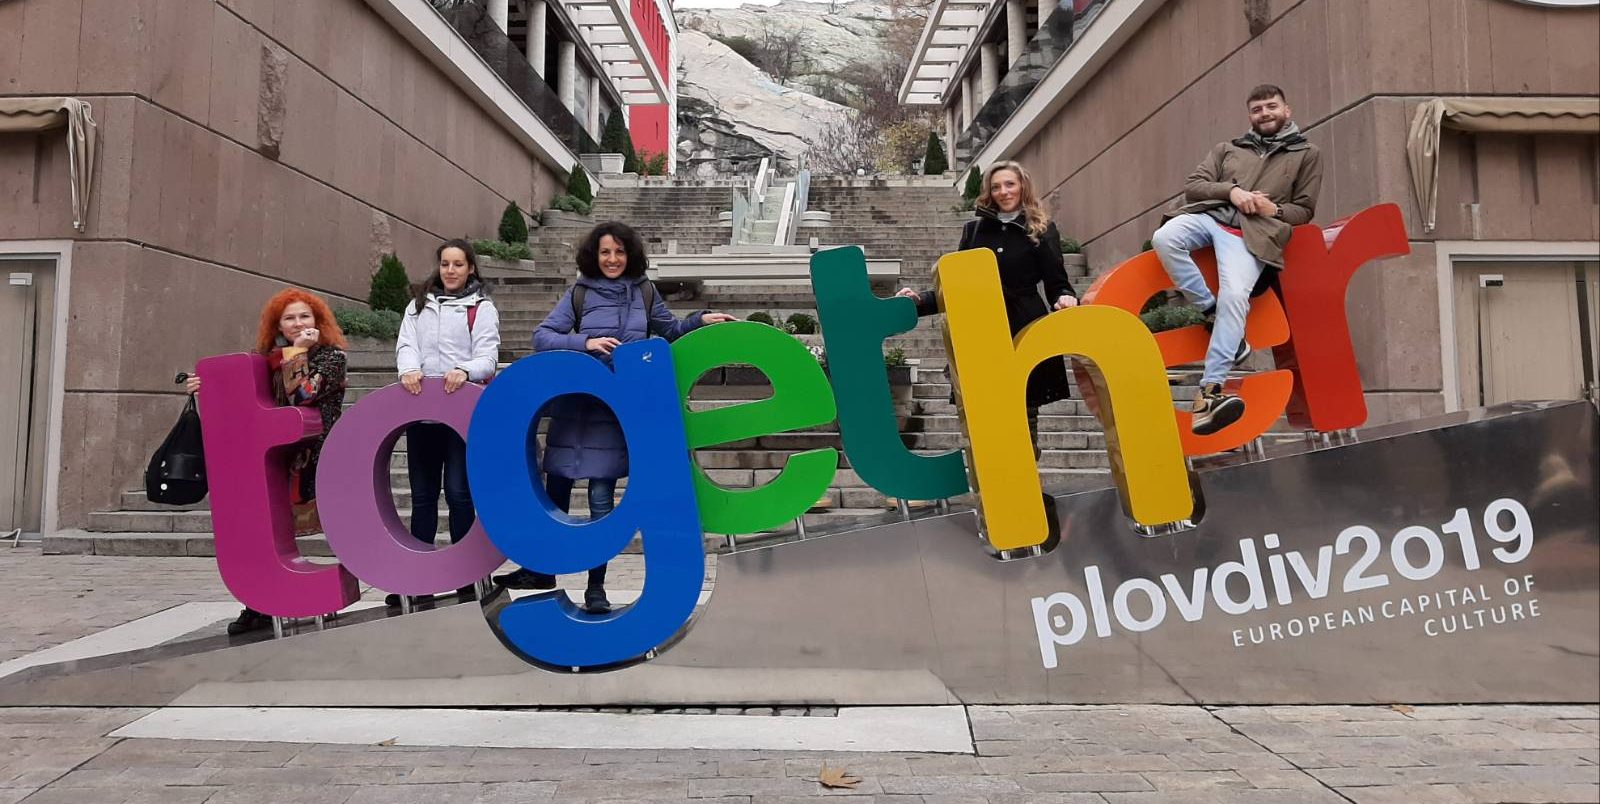 european capitals of culture plovdiv 2019